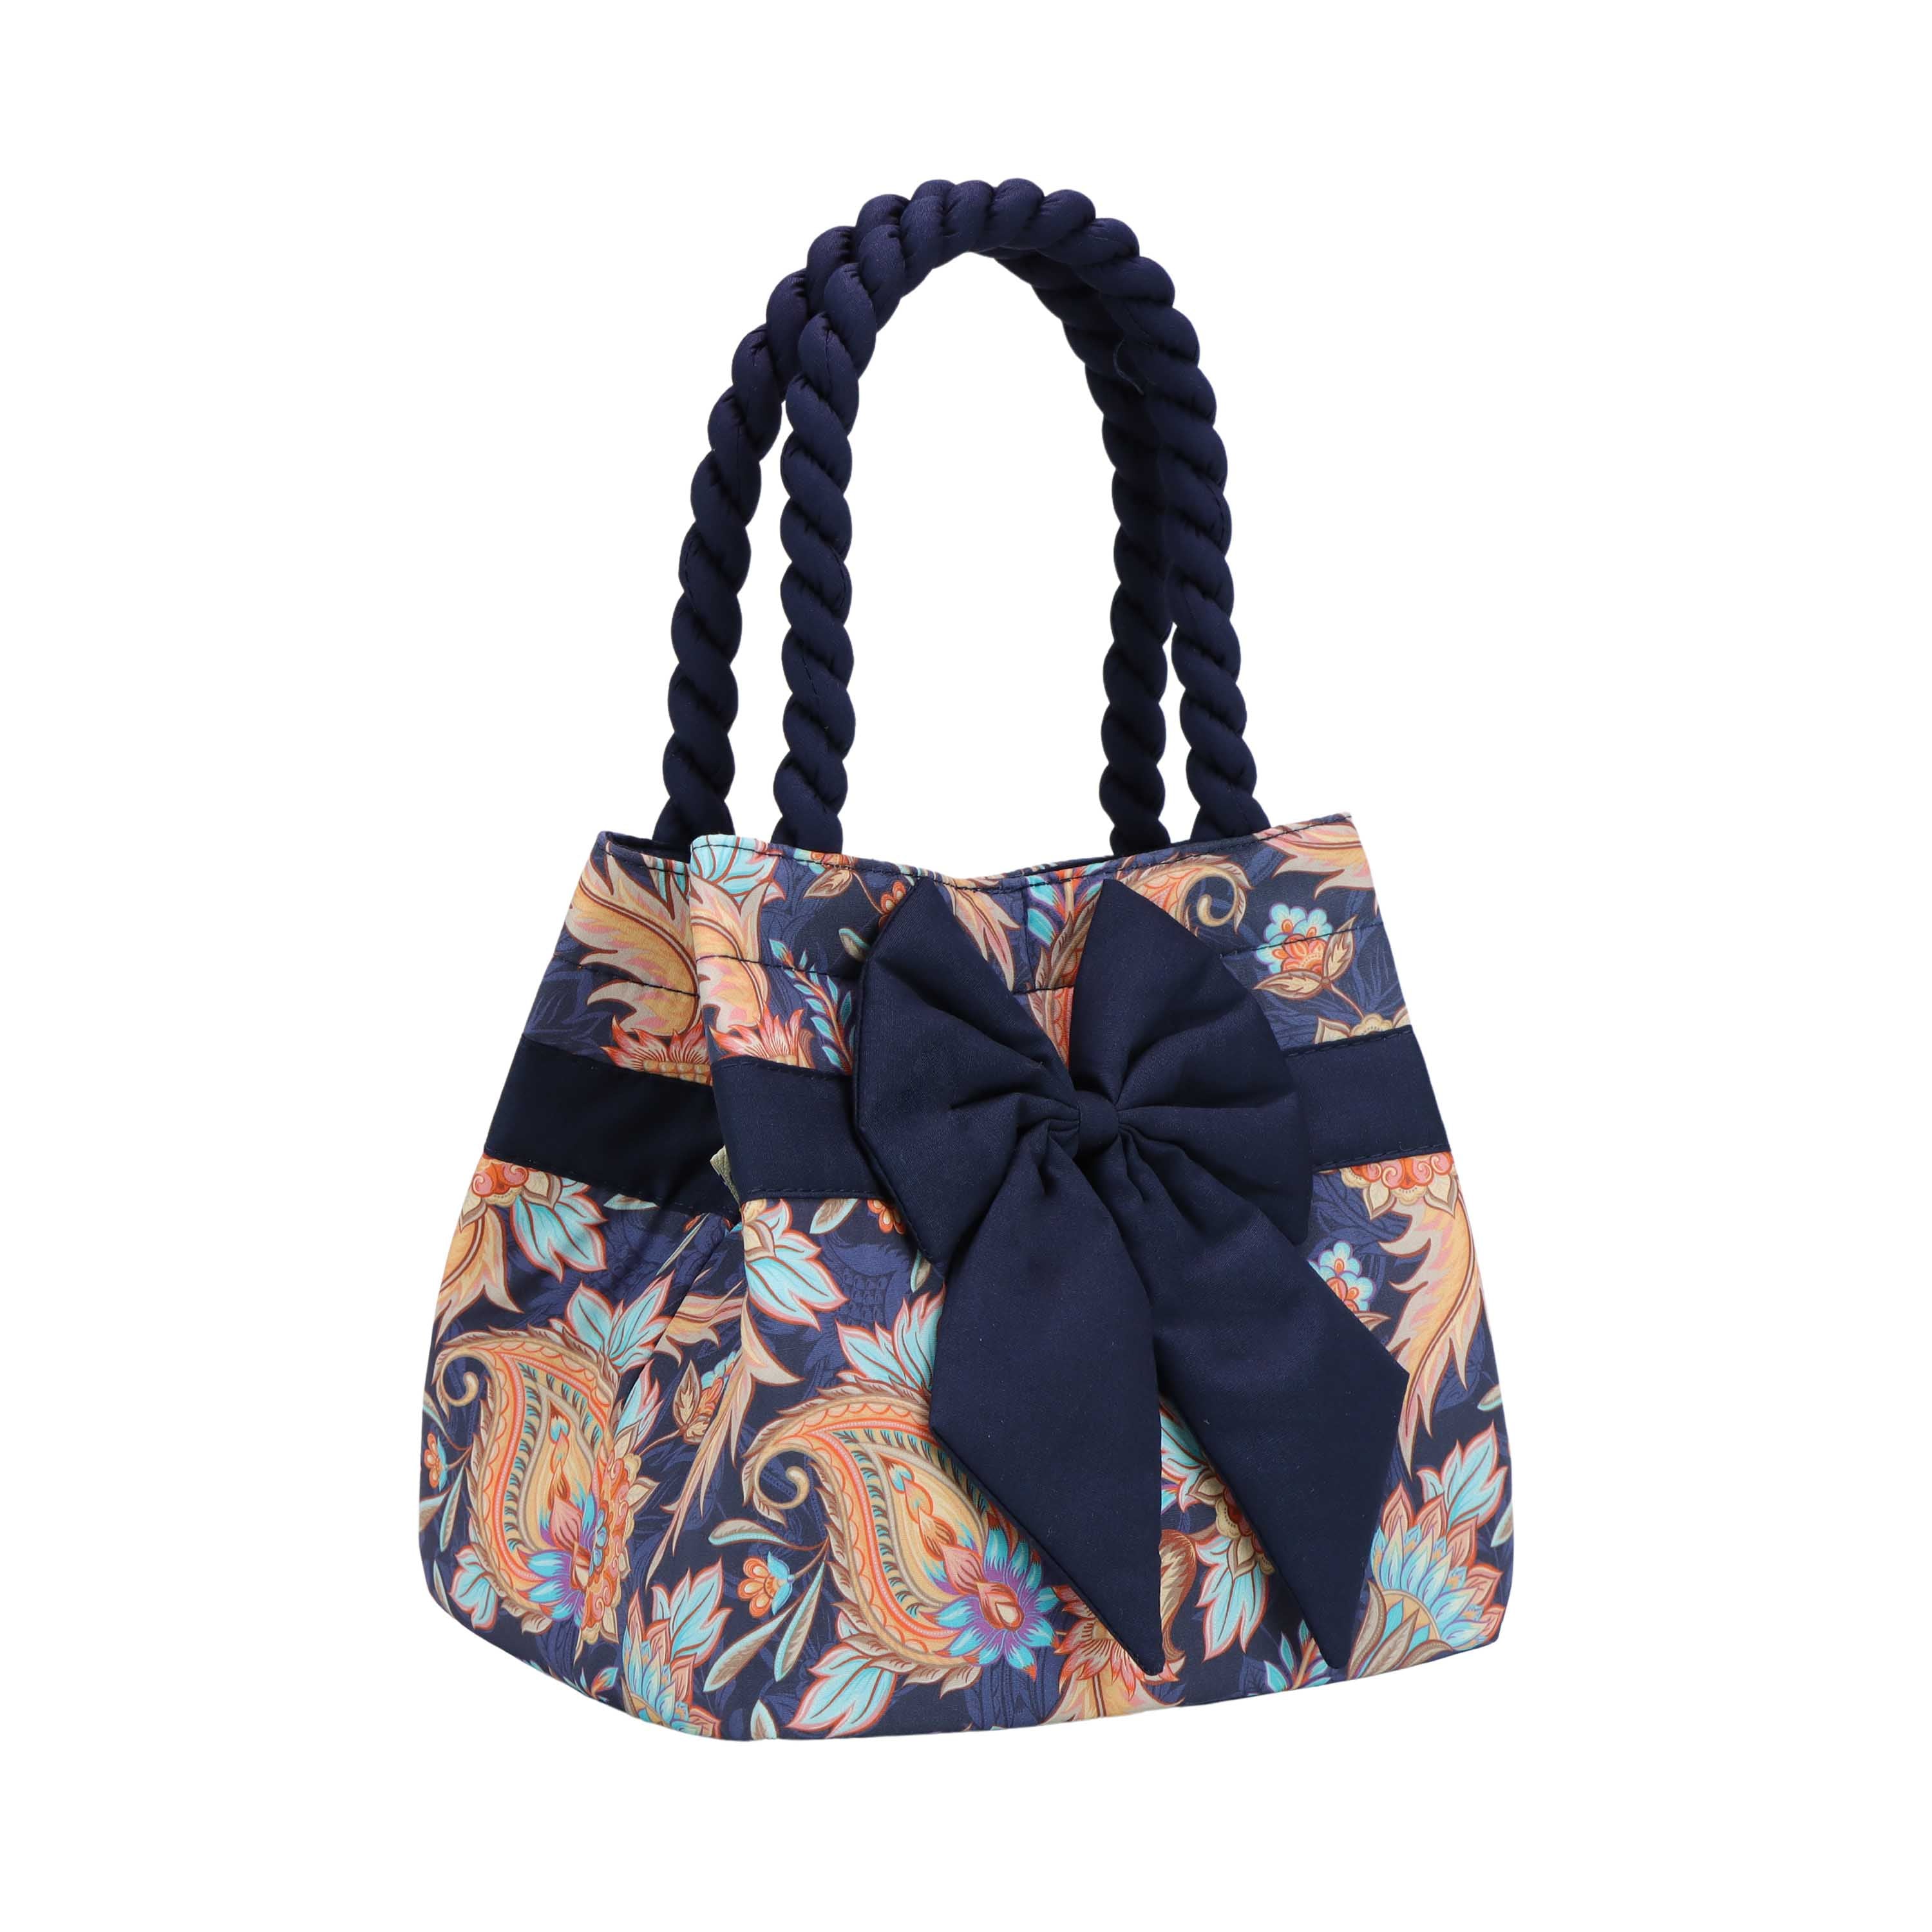 Elegant naraya bags in bangkok For Stylish And Trendy Looks 